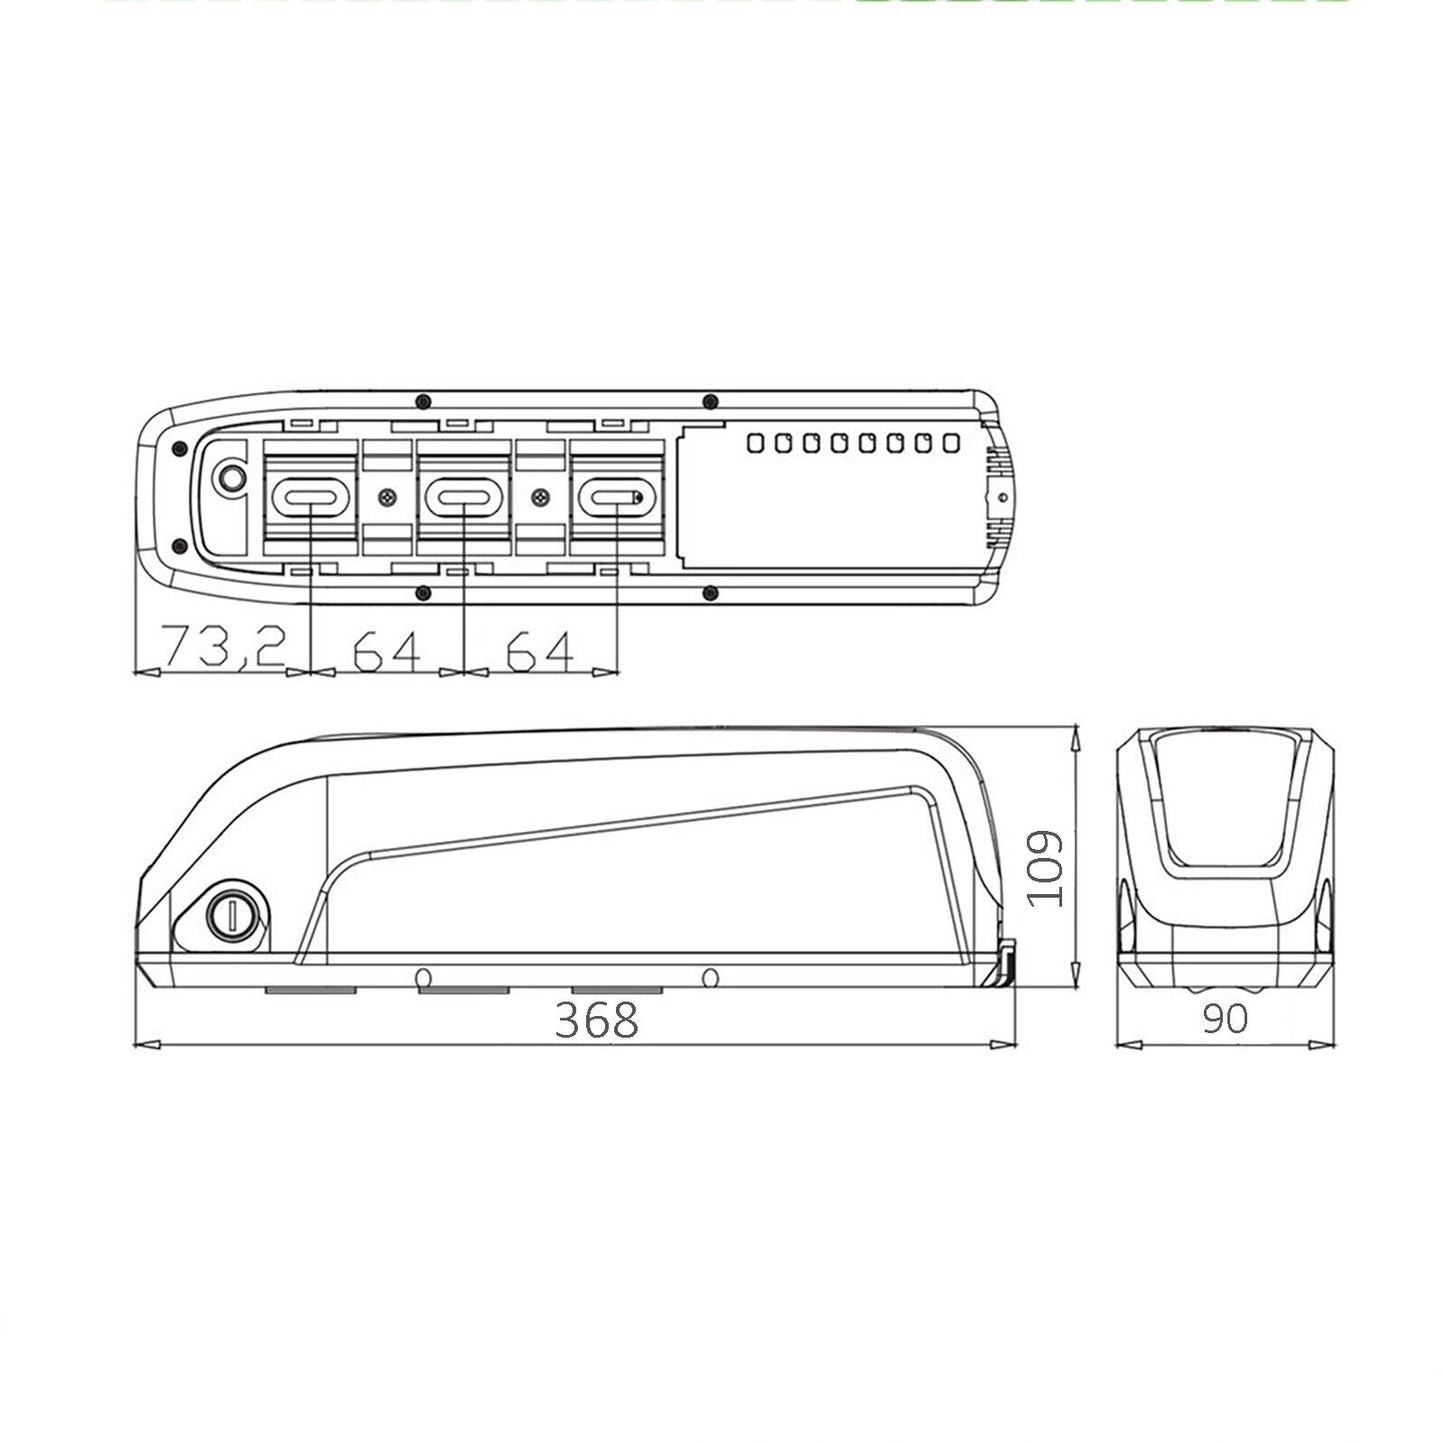 750W 26" Rear Hub Conversion Electric Bike Kit, Samsung Cell 48V 20AH Battery